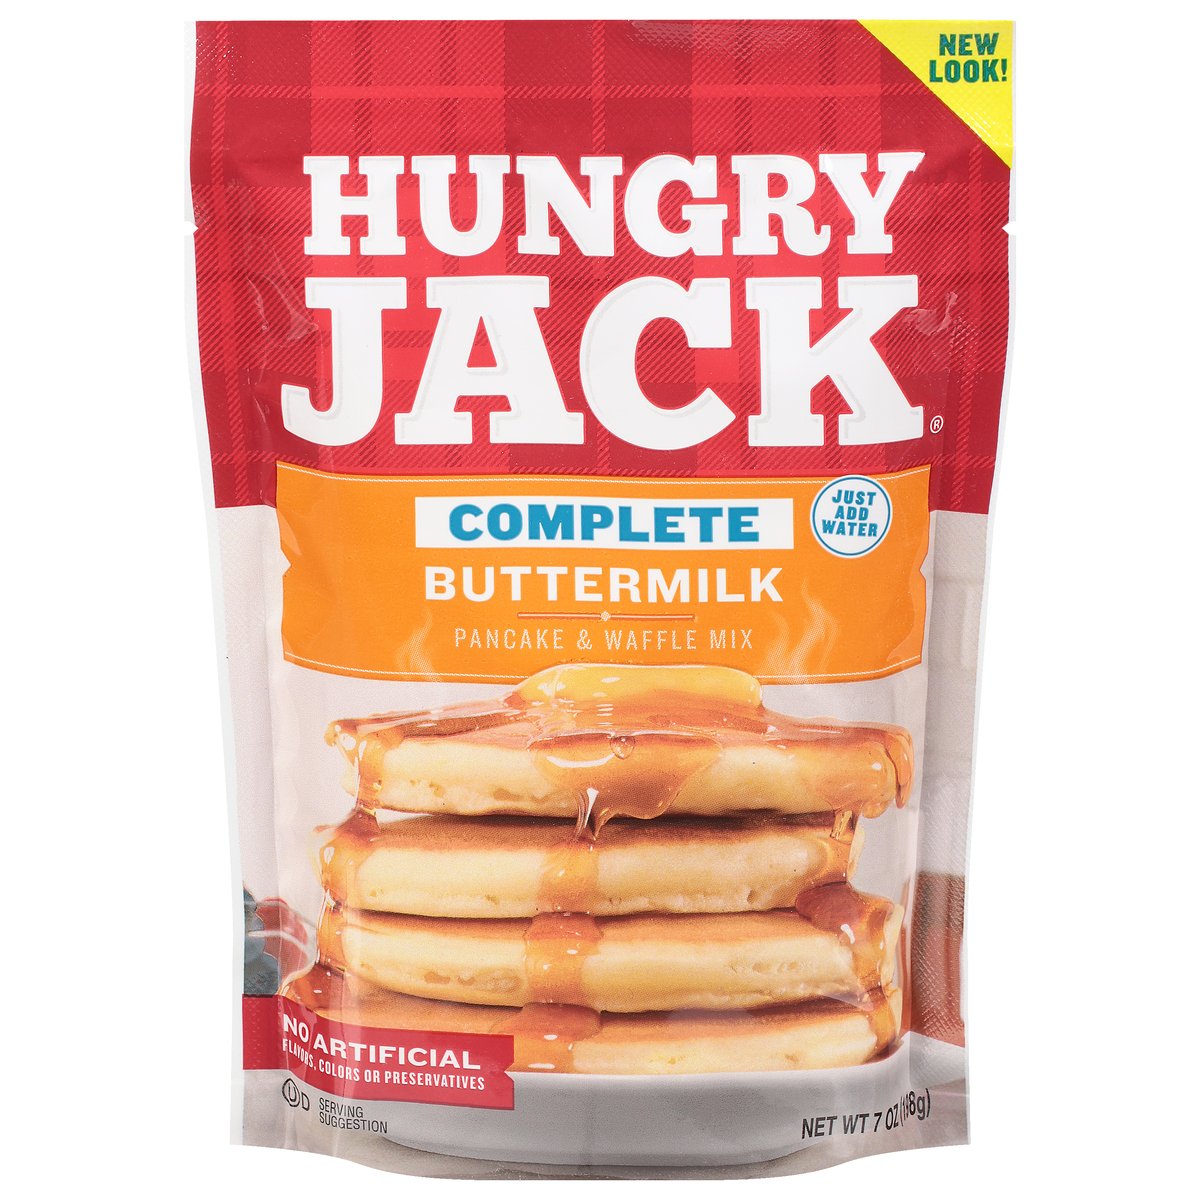 Hungry Jack Easy Pack Buttermilk Pancake Mix - Shop Pancake Mixes at H-E-B